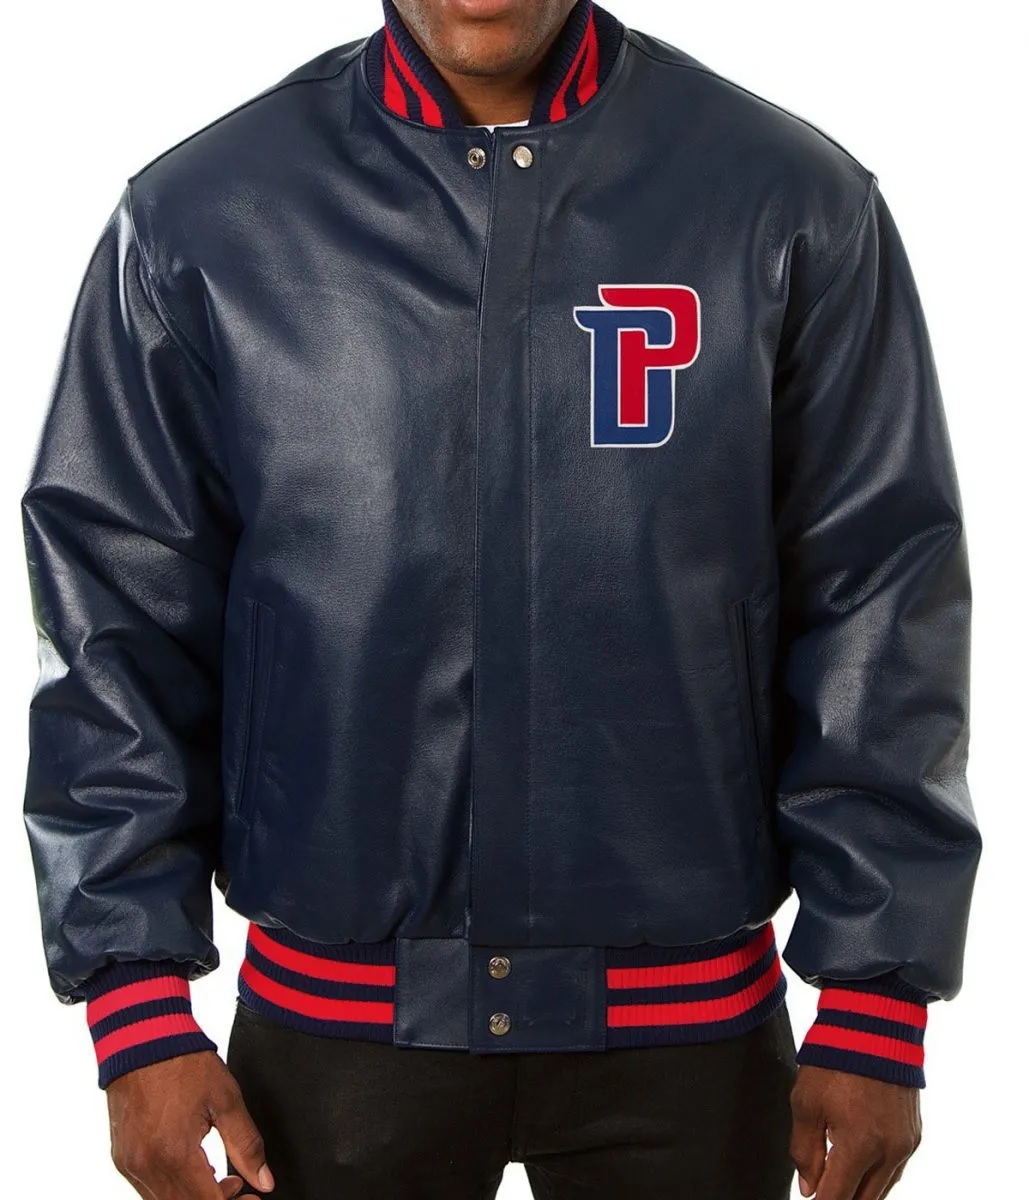 Varsity Detroit Pistons Navy Blue Leather Jacket